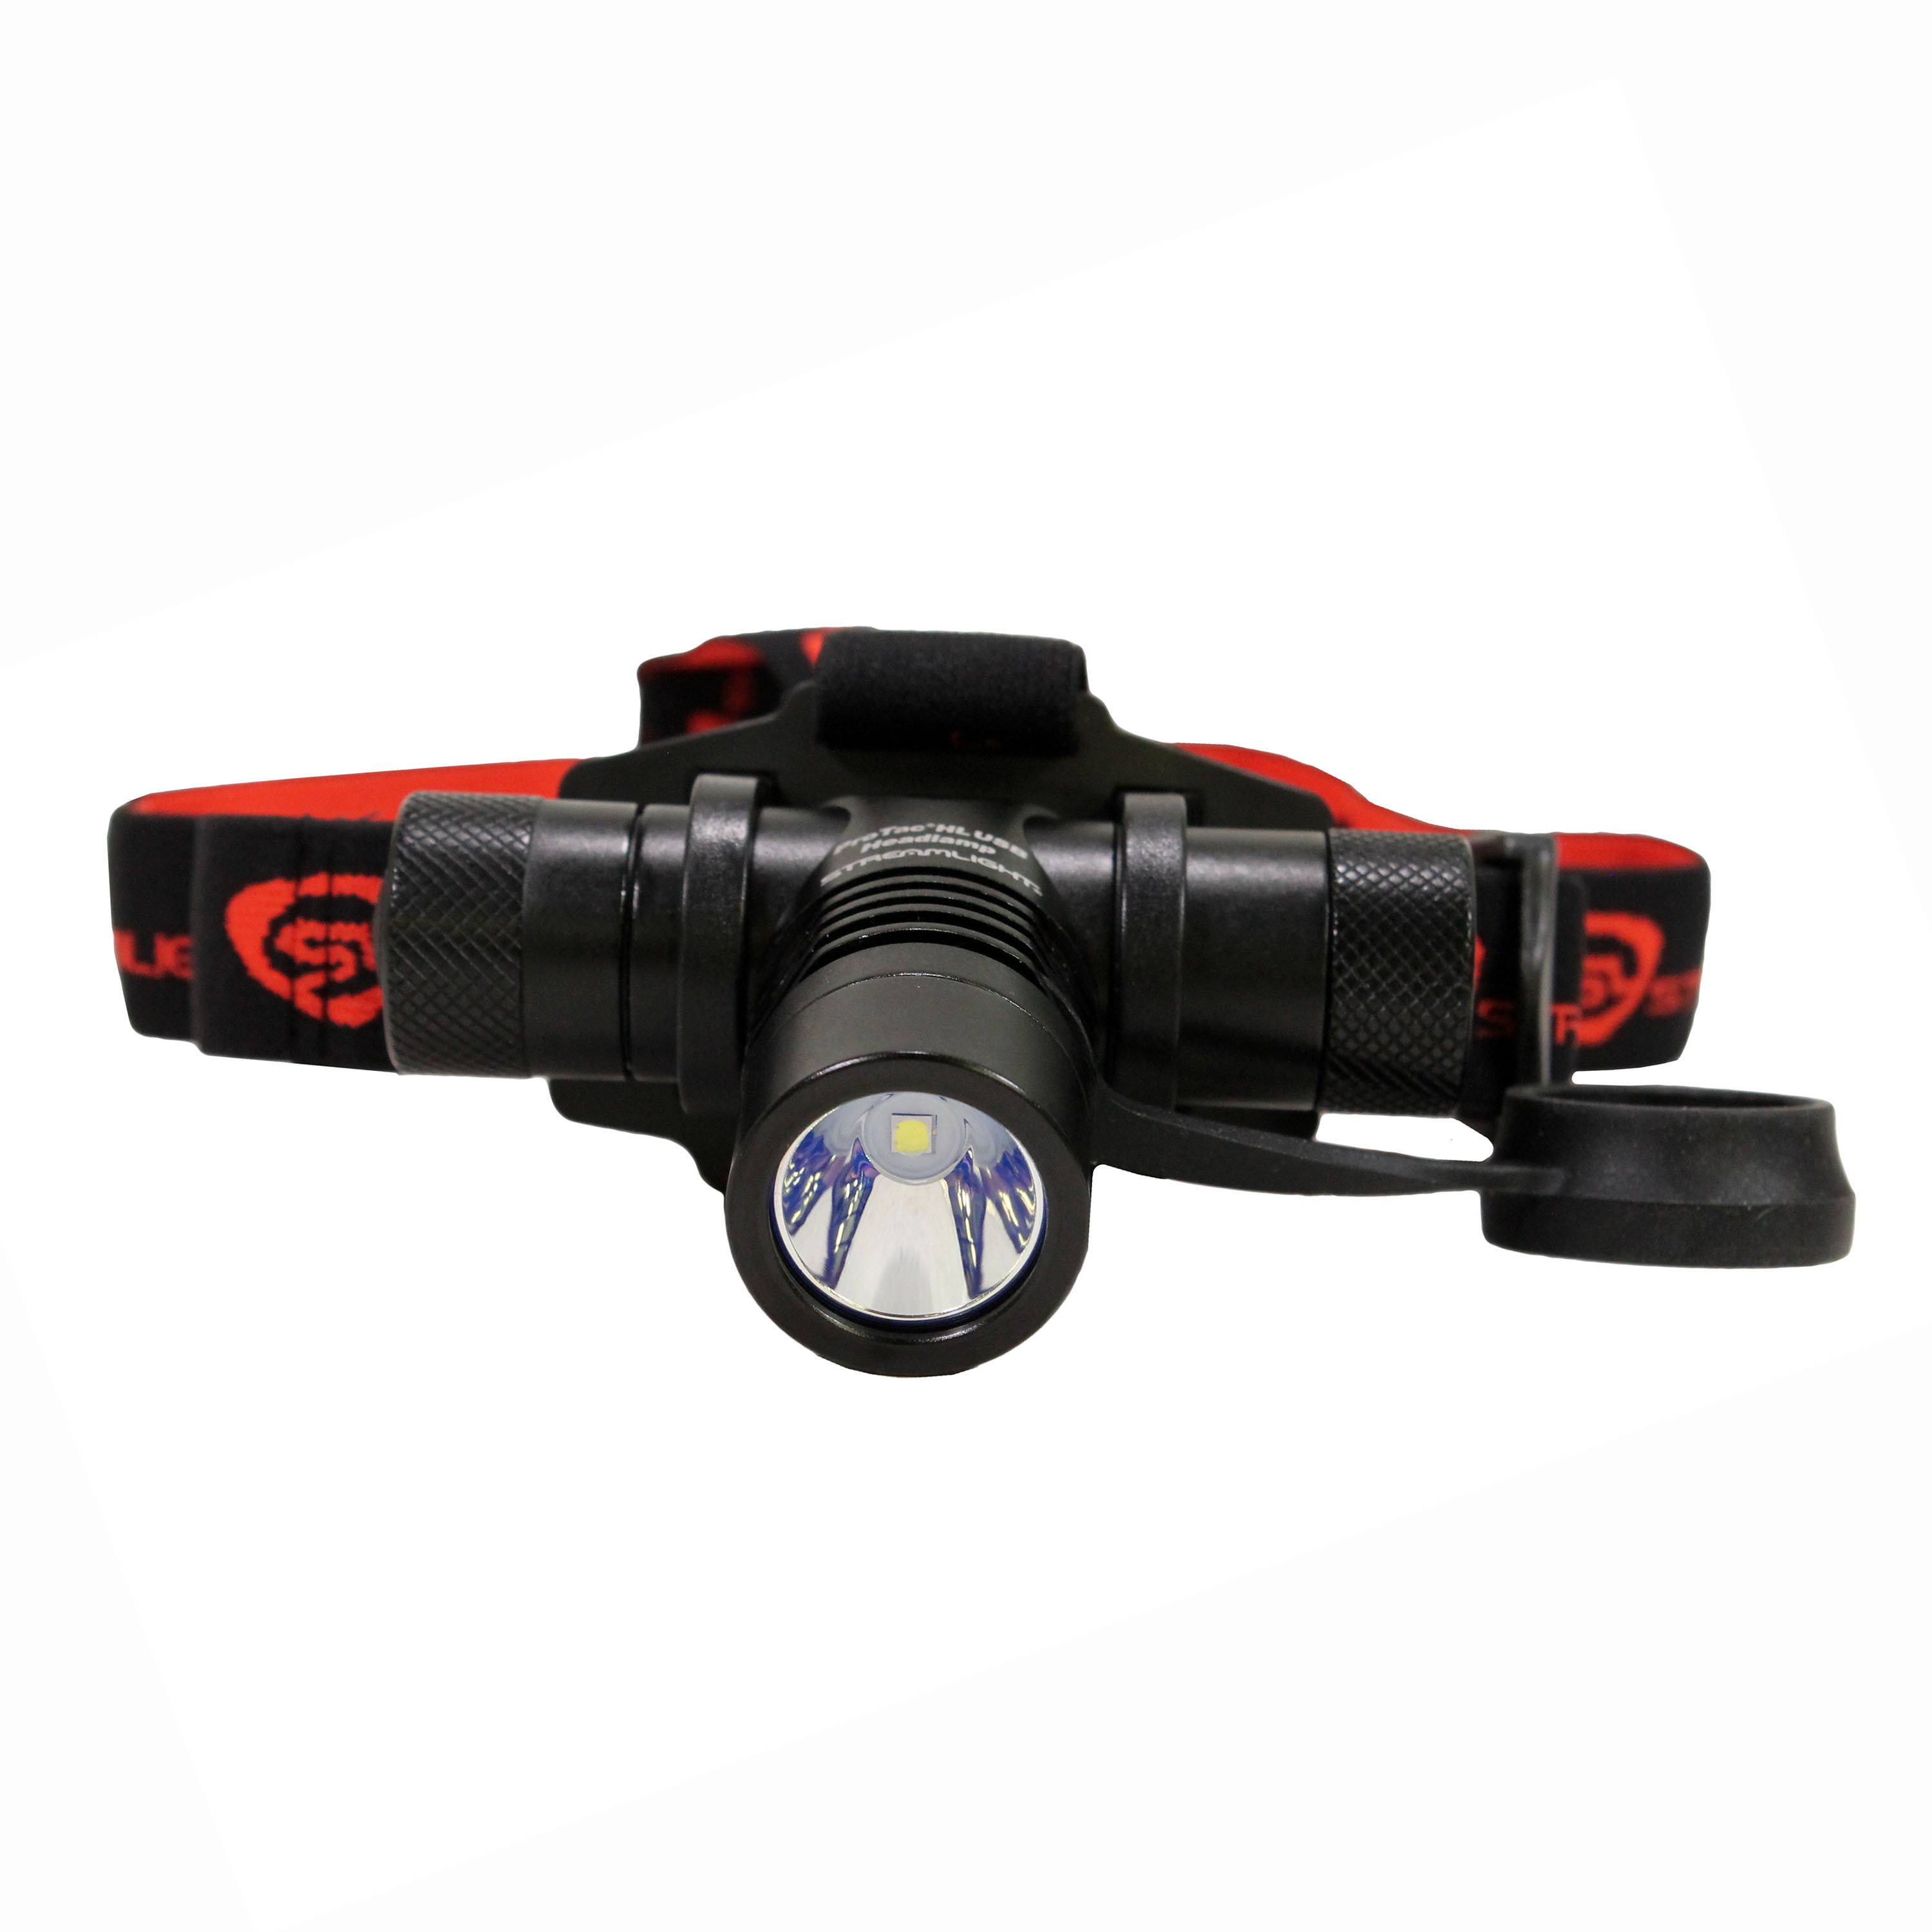 Streamlight 61307 ProTac HL 1000 Lumen LED Rechargeable Headlamp